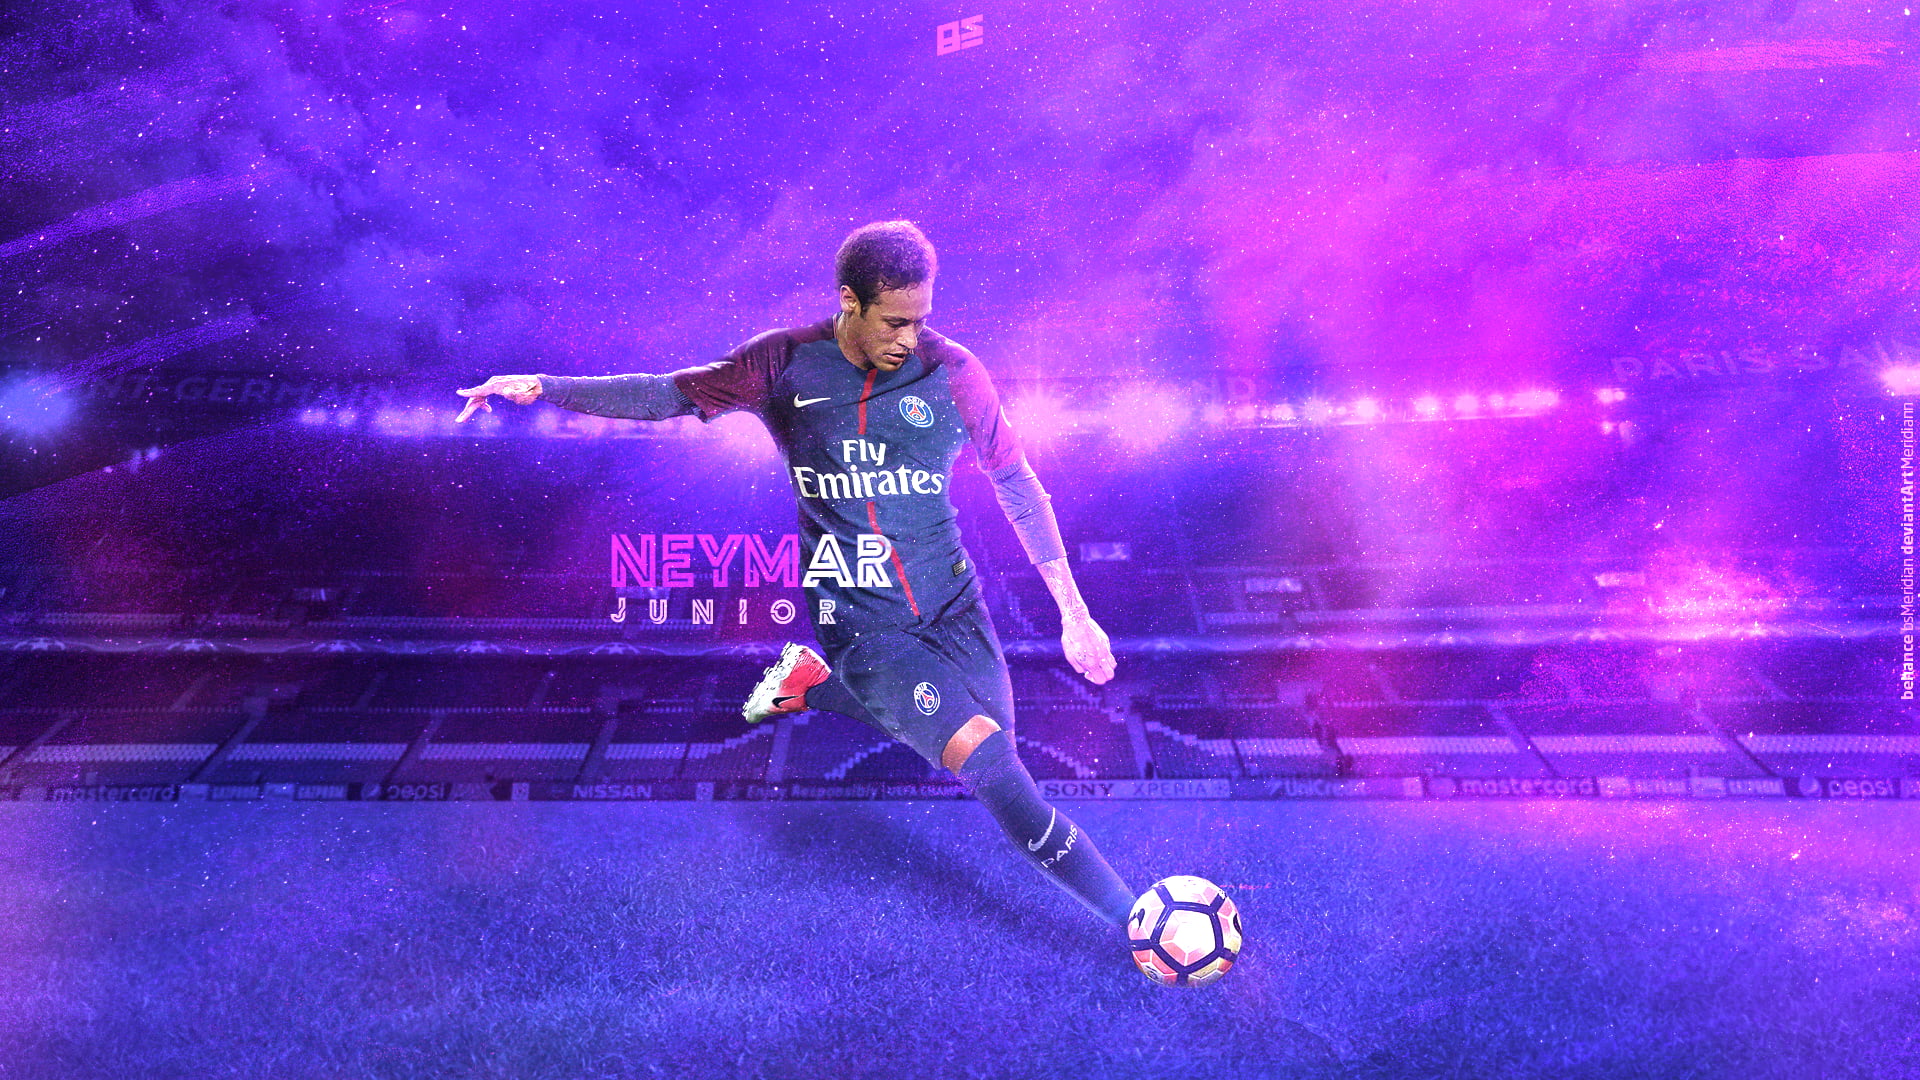 Neymar Junior Fly Emirates wallpaper, Neymar JR., Paris Saint-Germain